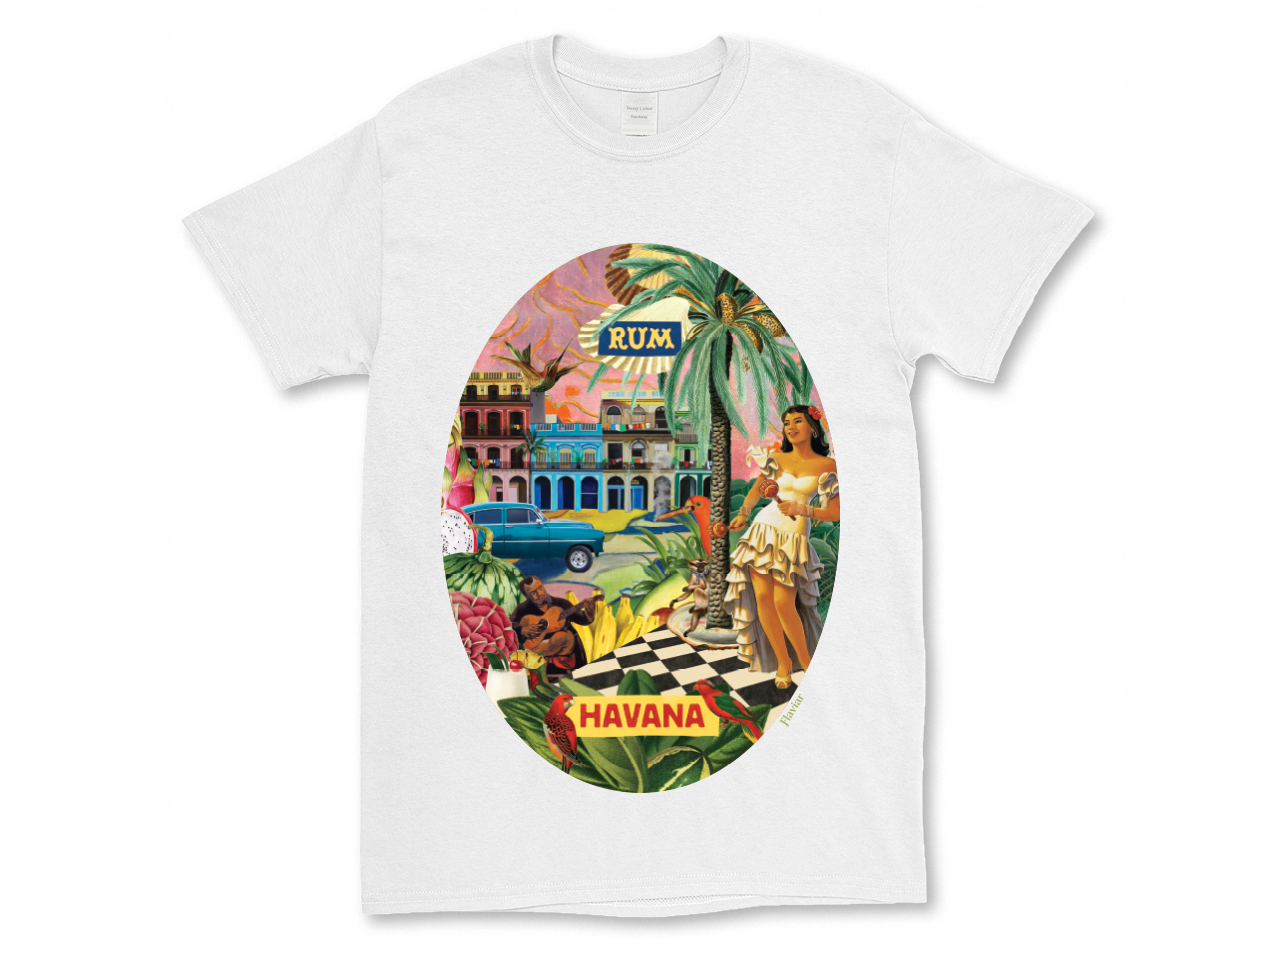 Carousel collection T-shirt - Havana (Female - M)